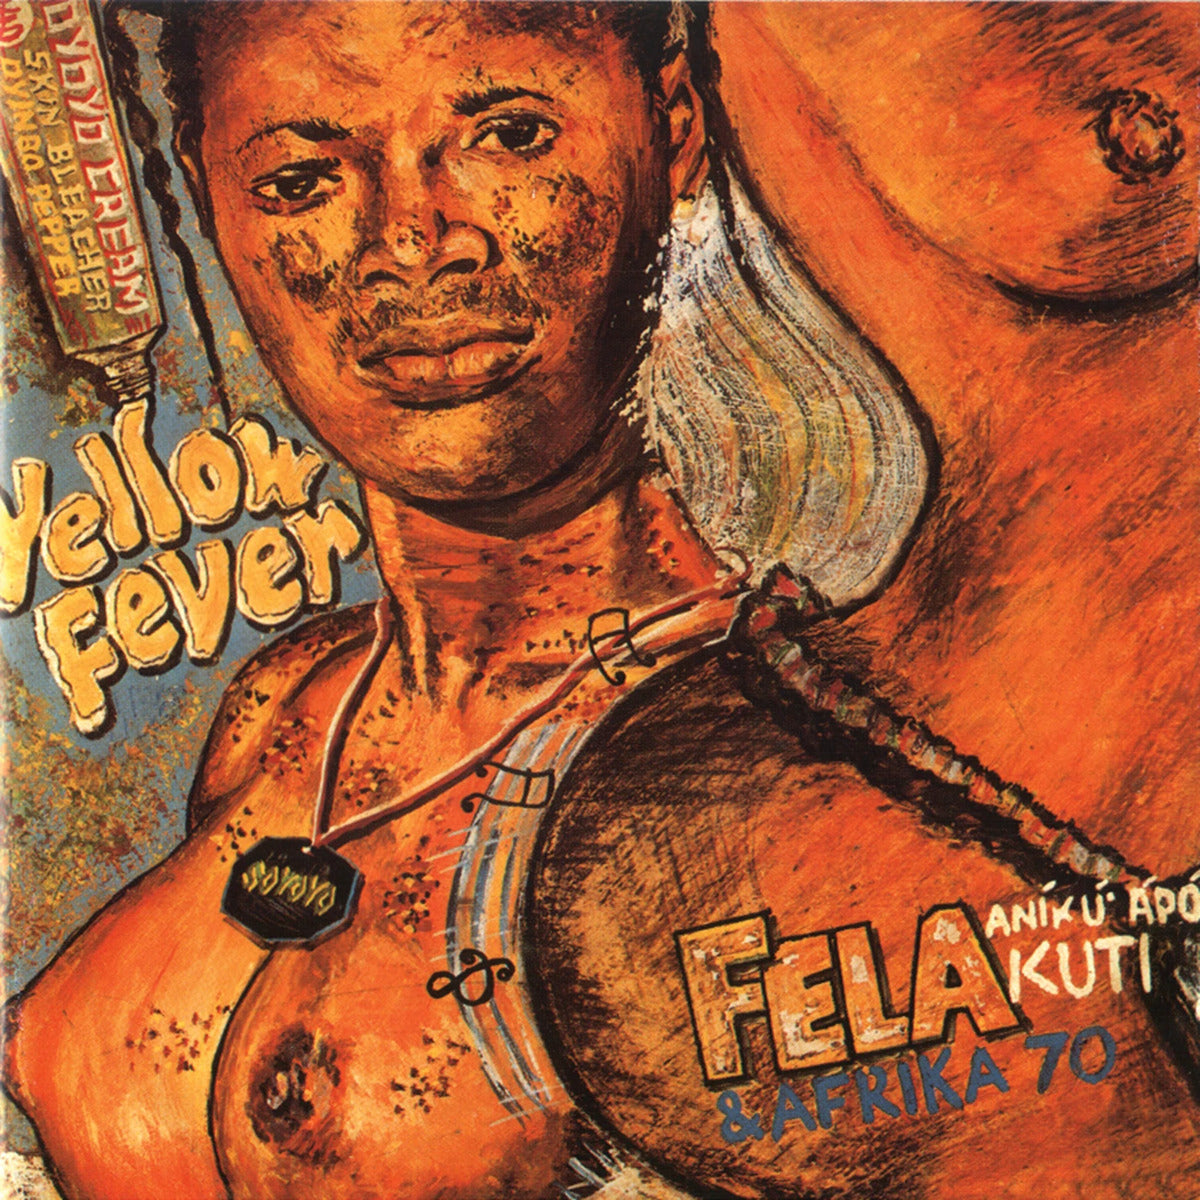 Fela Anikulapo Kuti & Afrika 70 ~ Yellow Fever